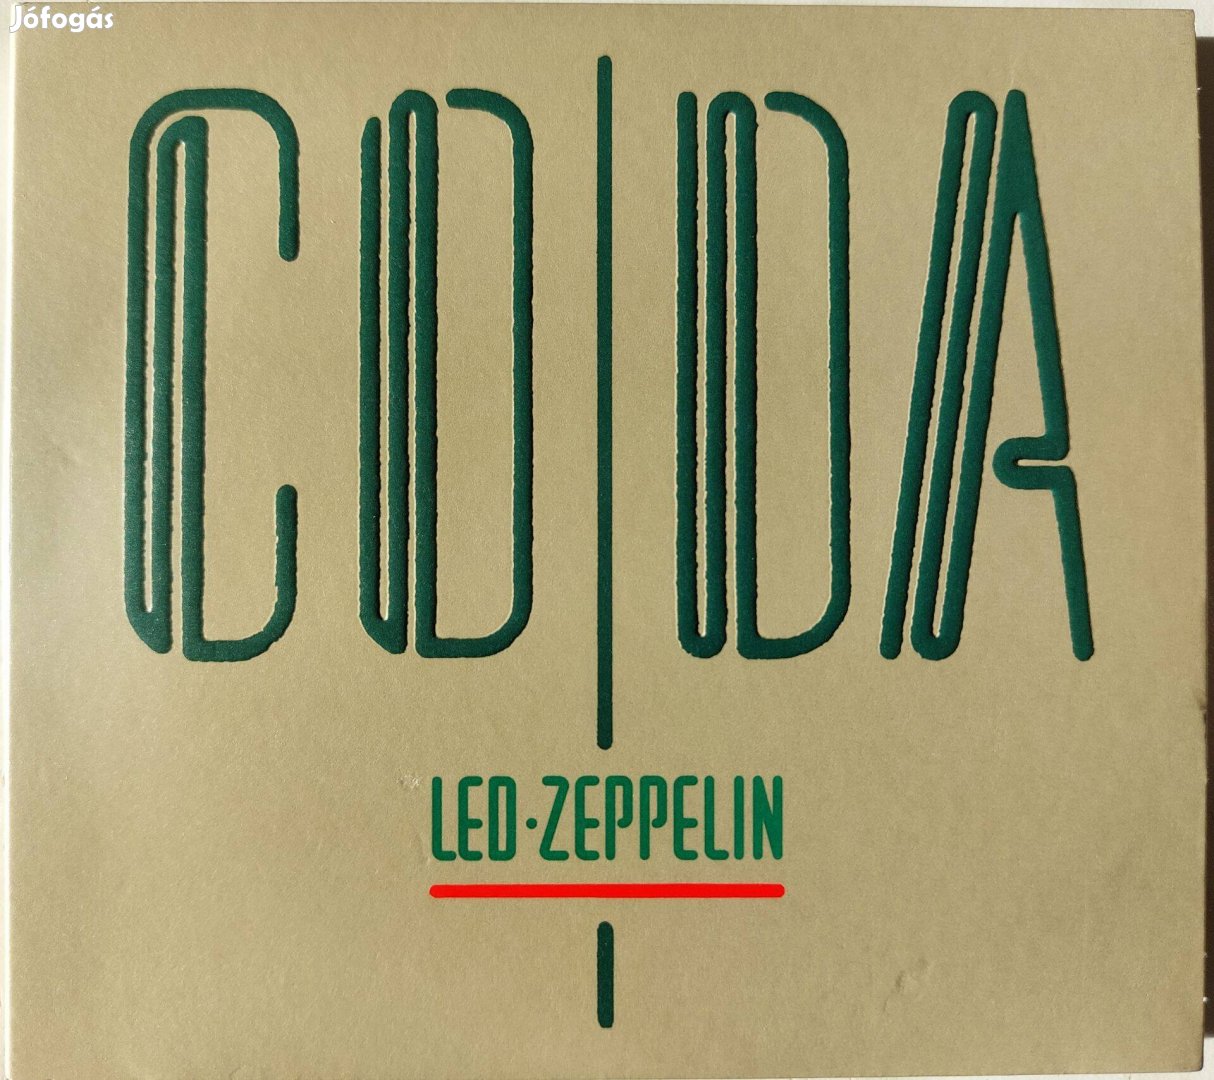 Led Zeppelin - Coda 3 CD Deluxe Edition